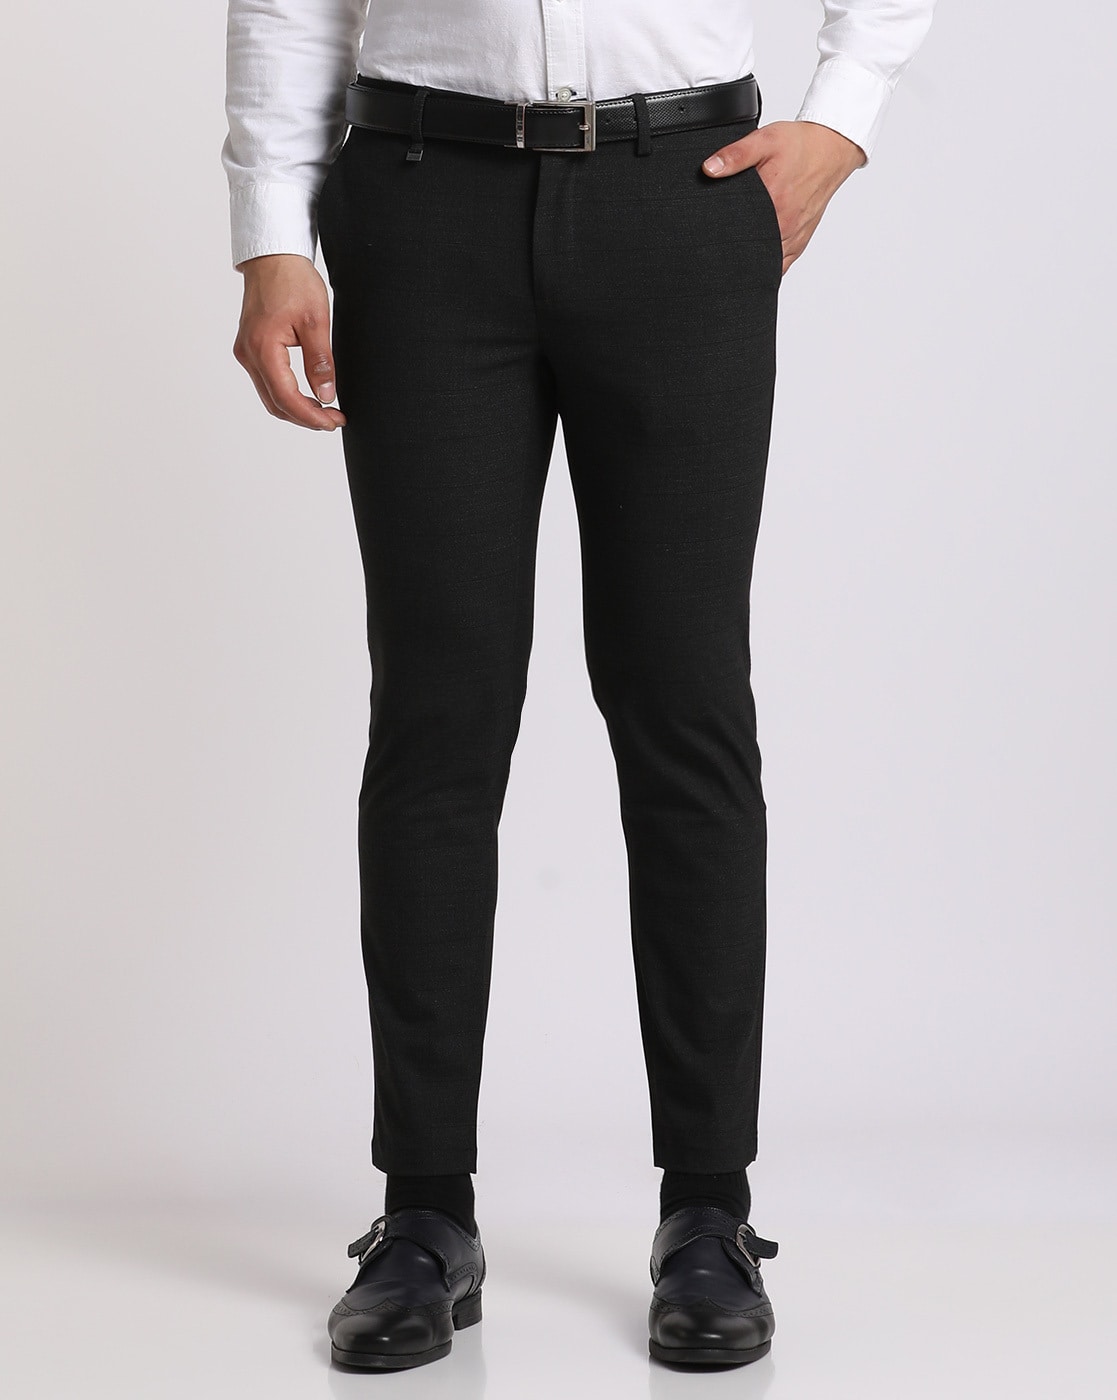 Wintage Men's Black Regular Fit Pant 100% Linen